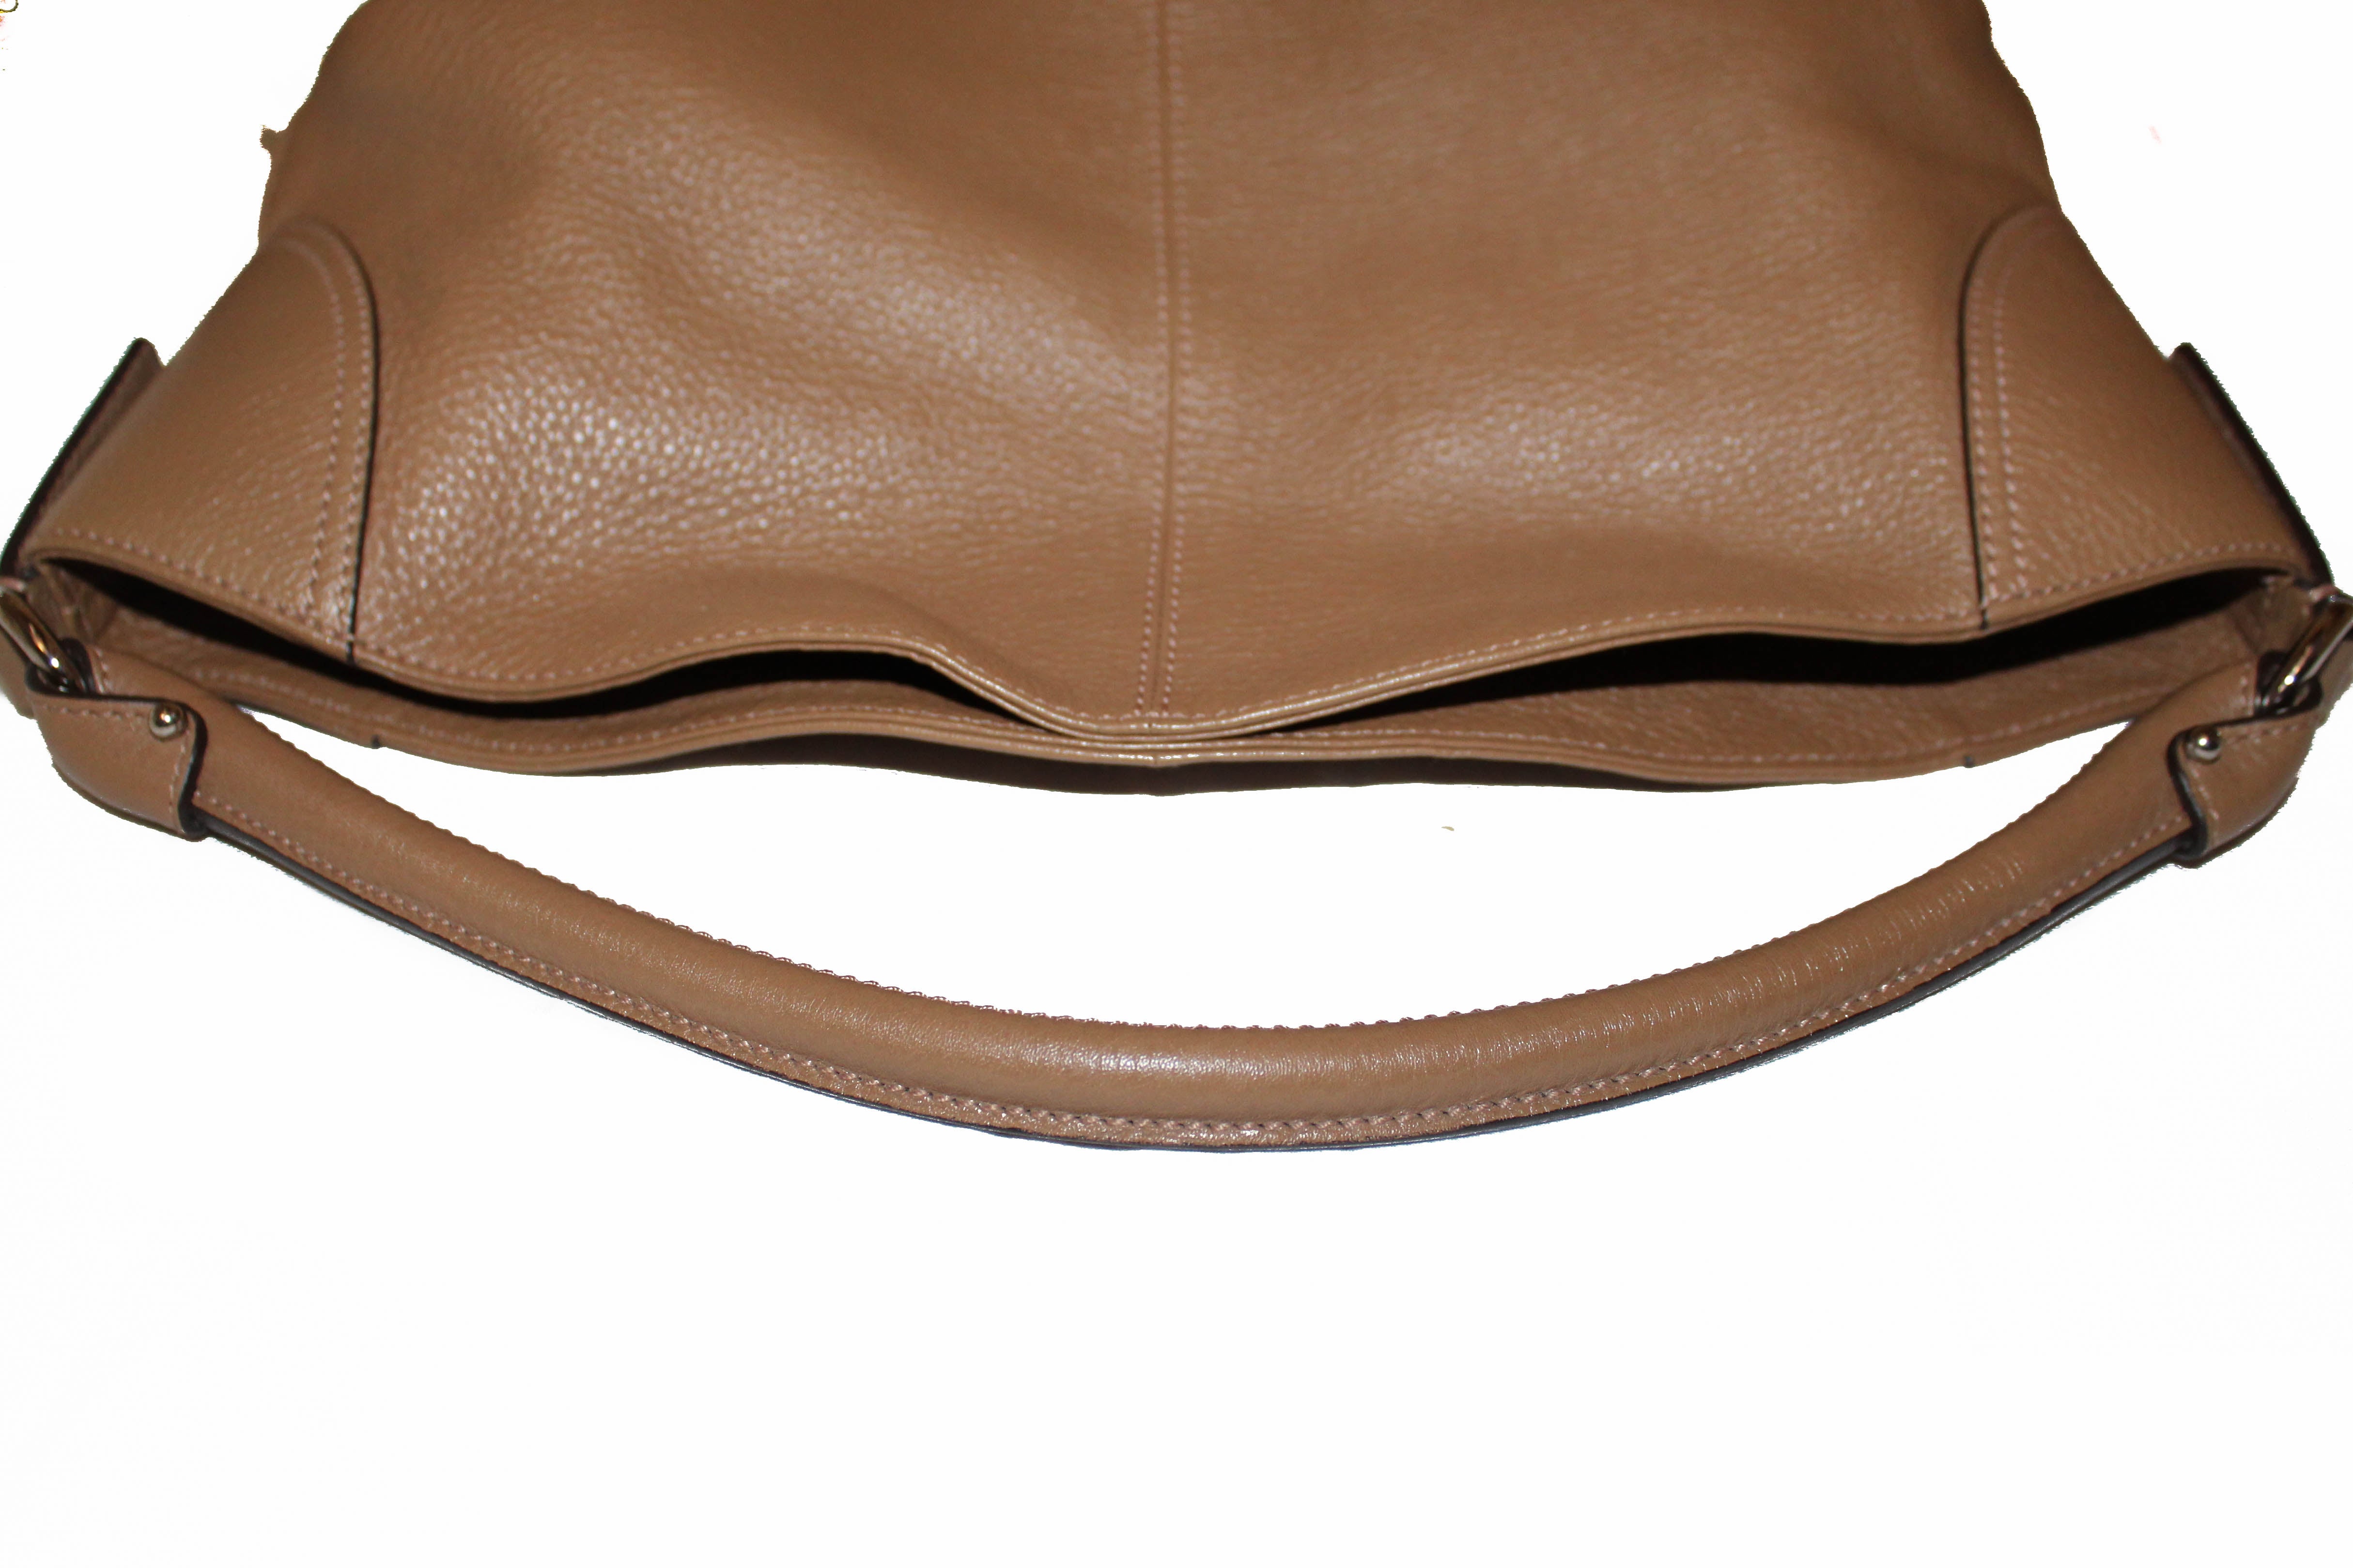 Authentic Salvatore Ferragamo Brown Calfskin Leather Hobo Bag